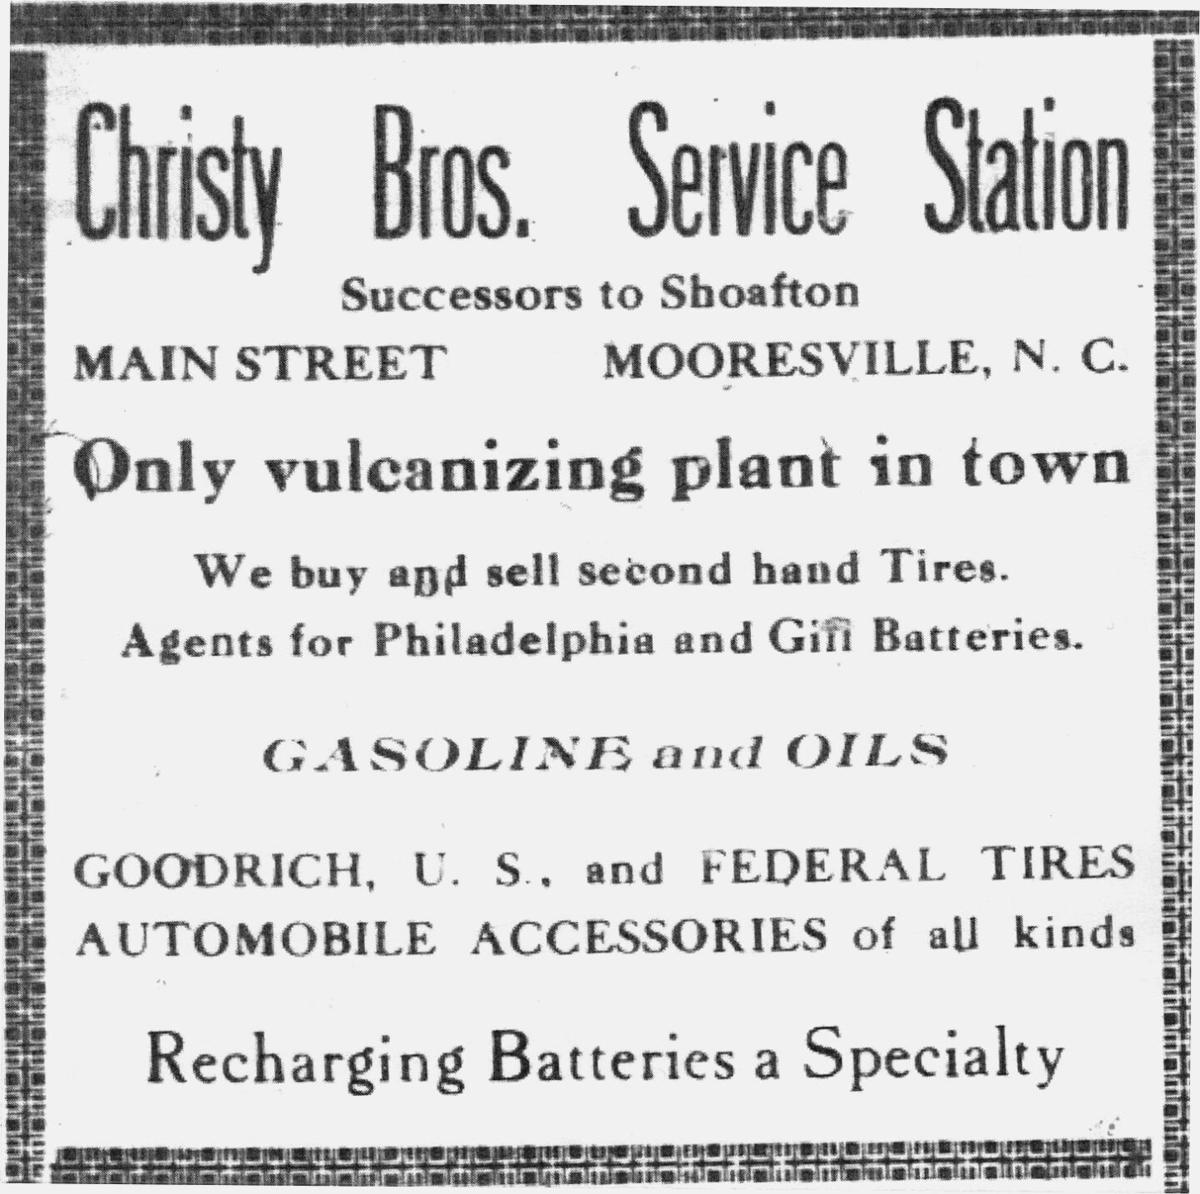 Christy Bros. Service Station 1922.jpg